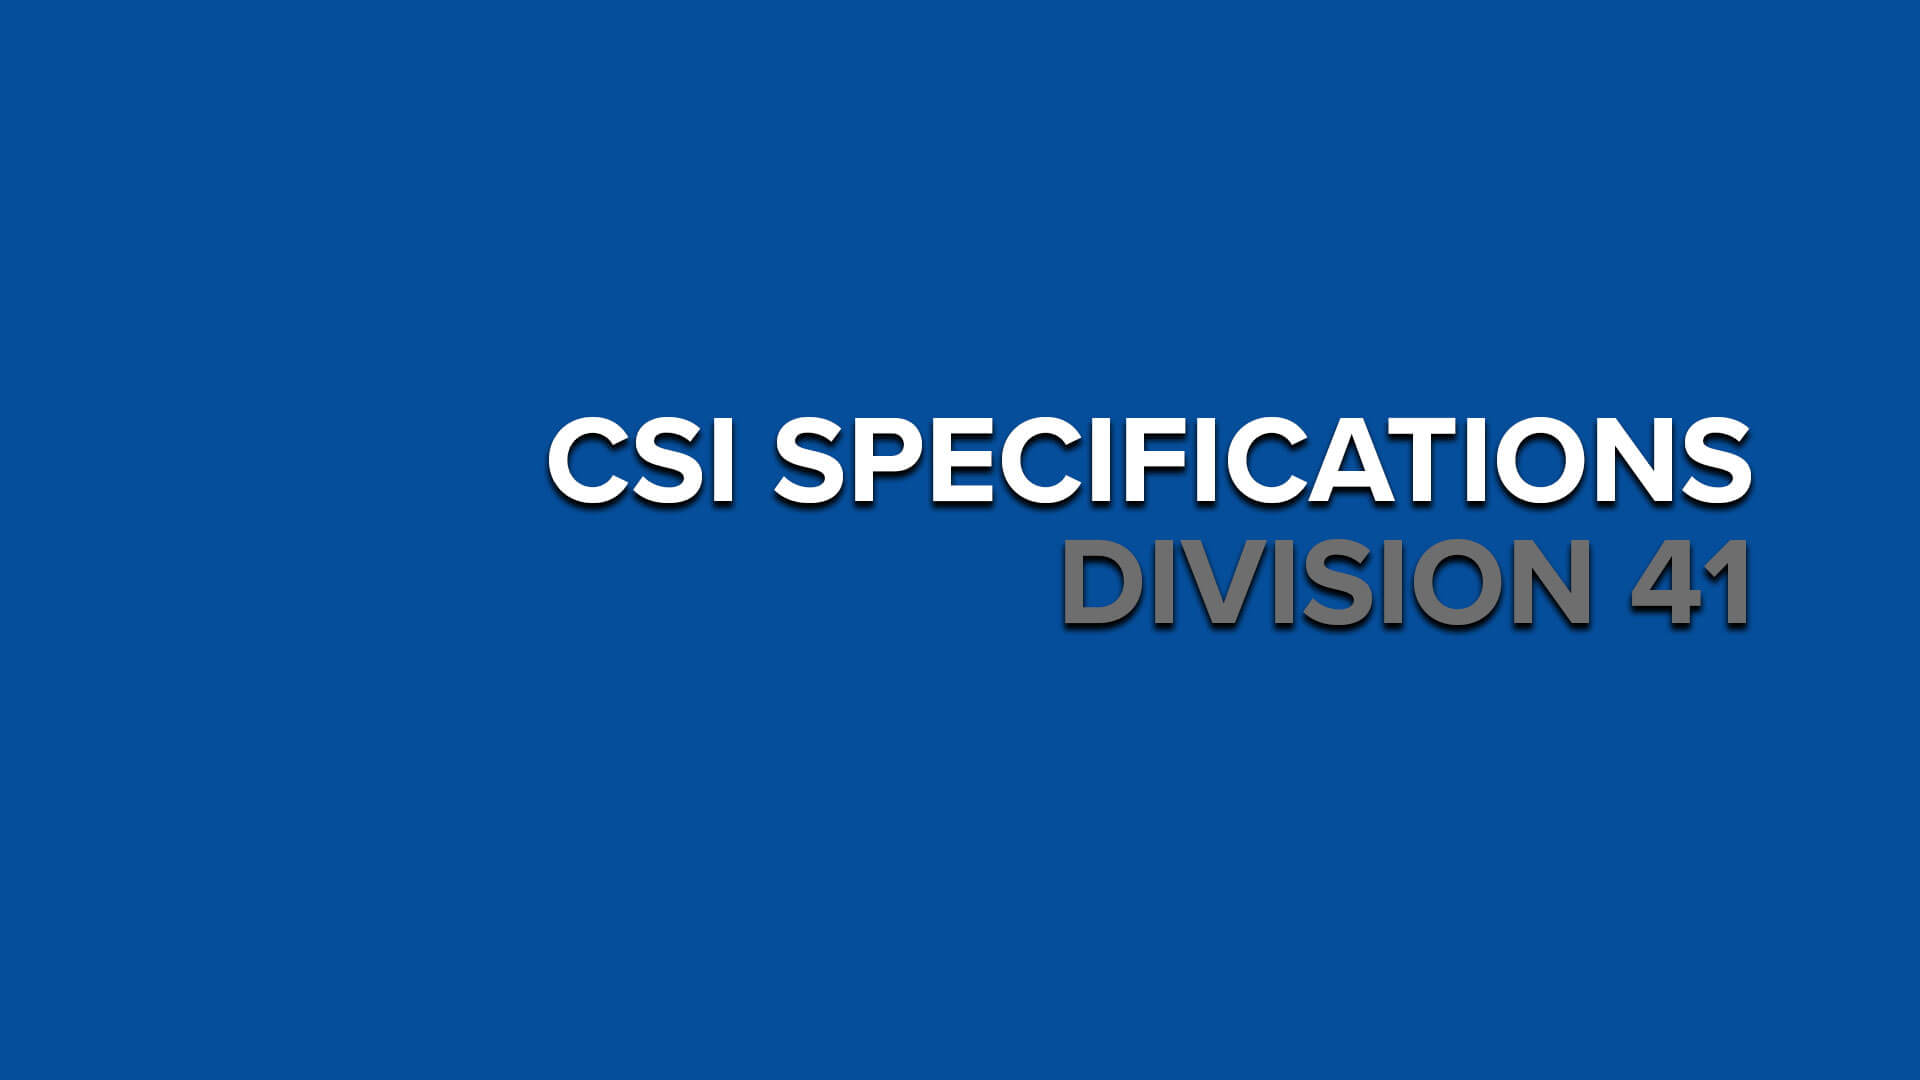 Csi specifications division 41